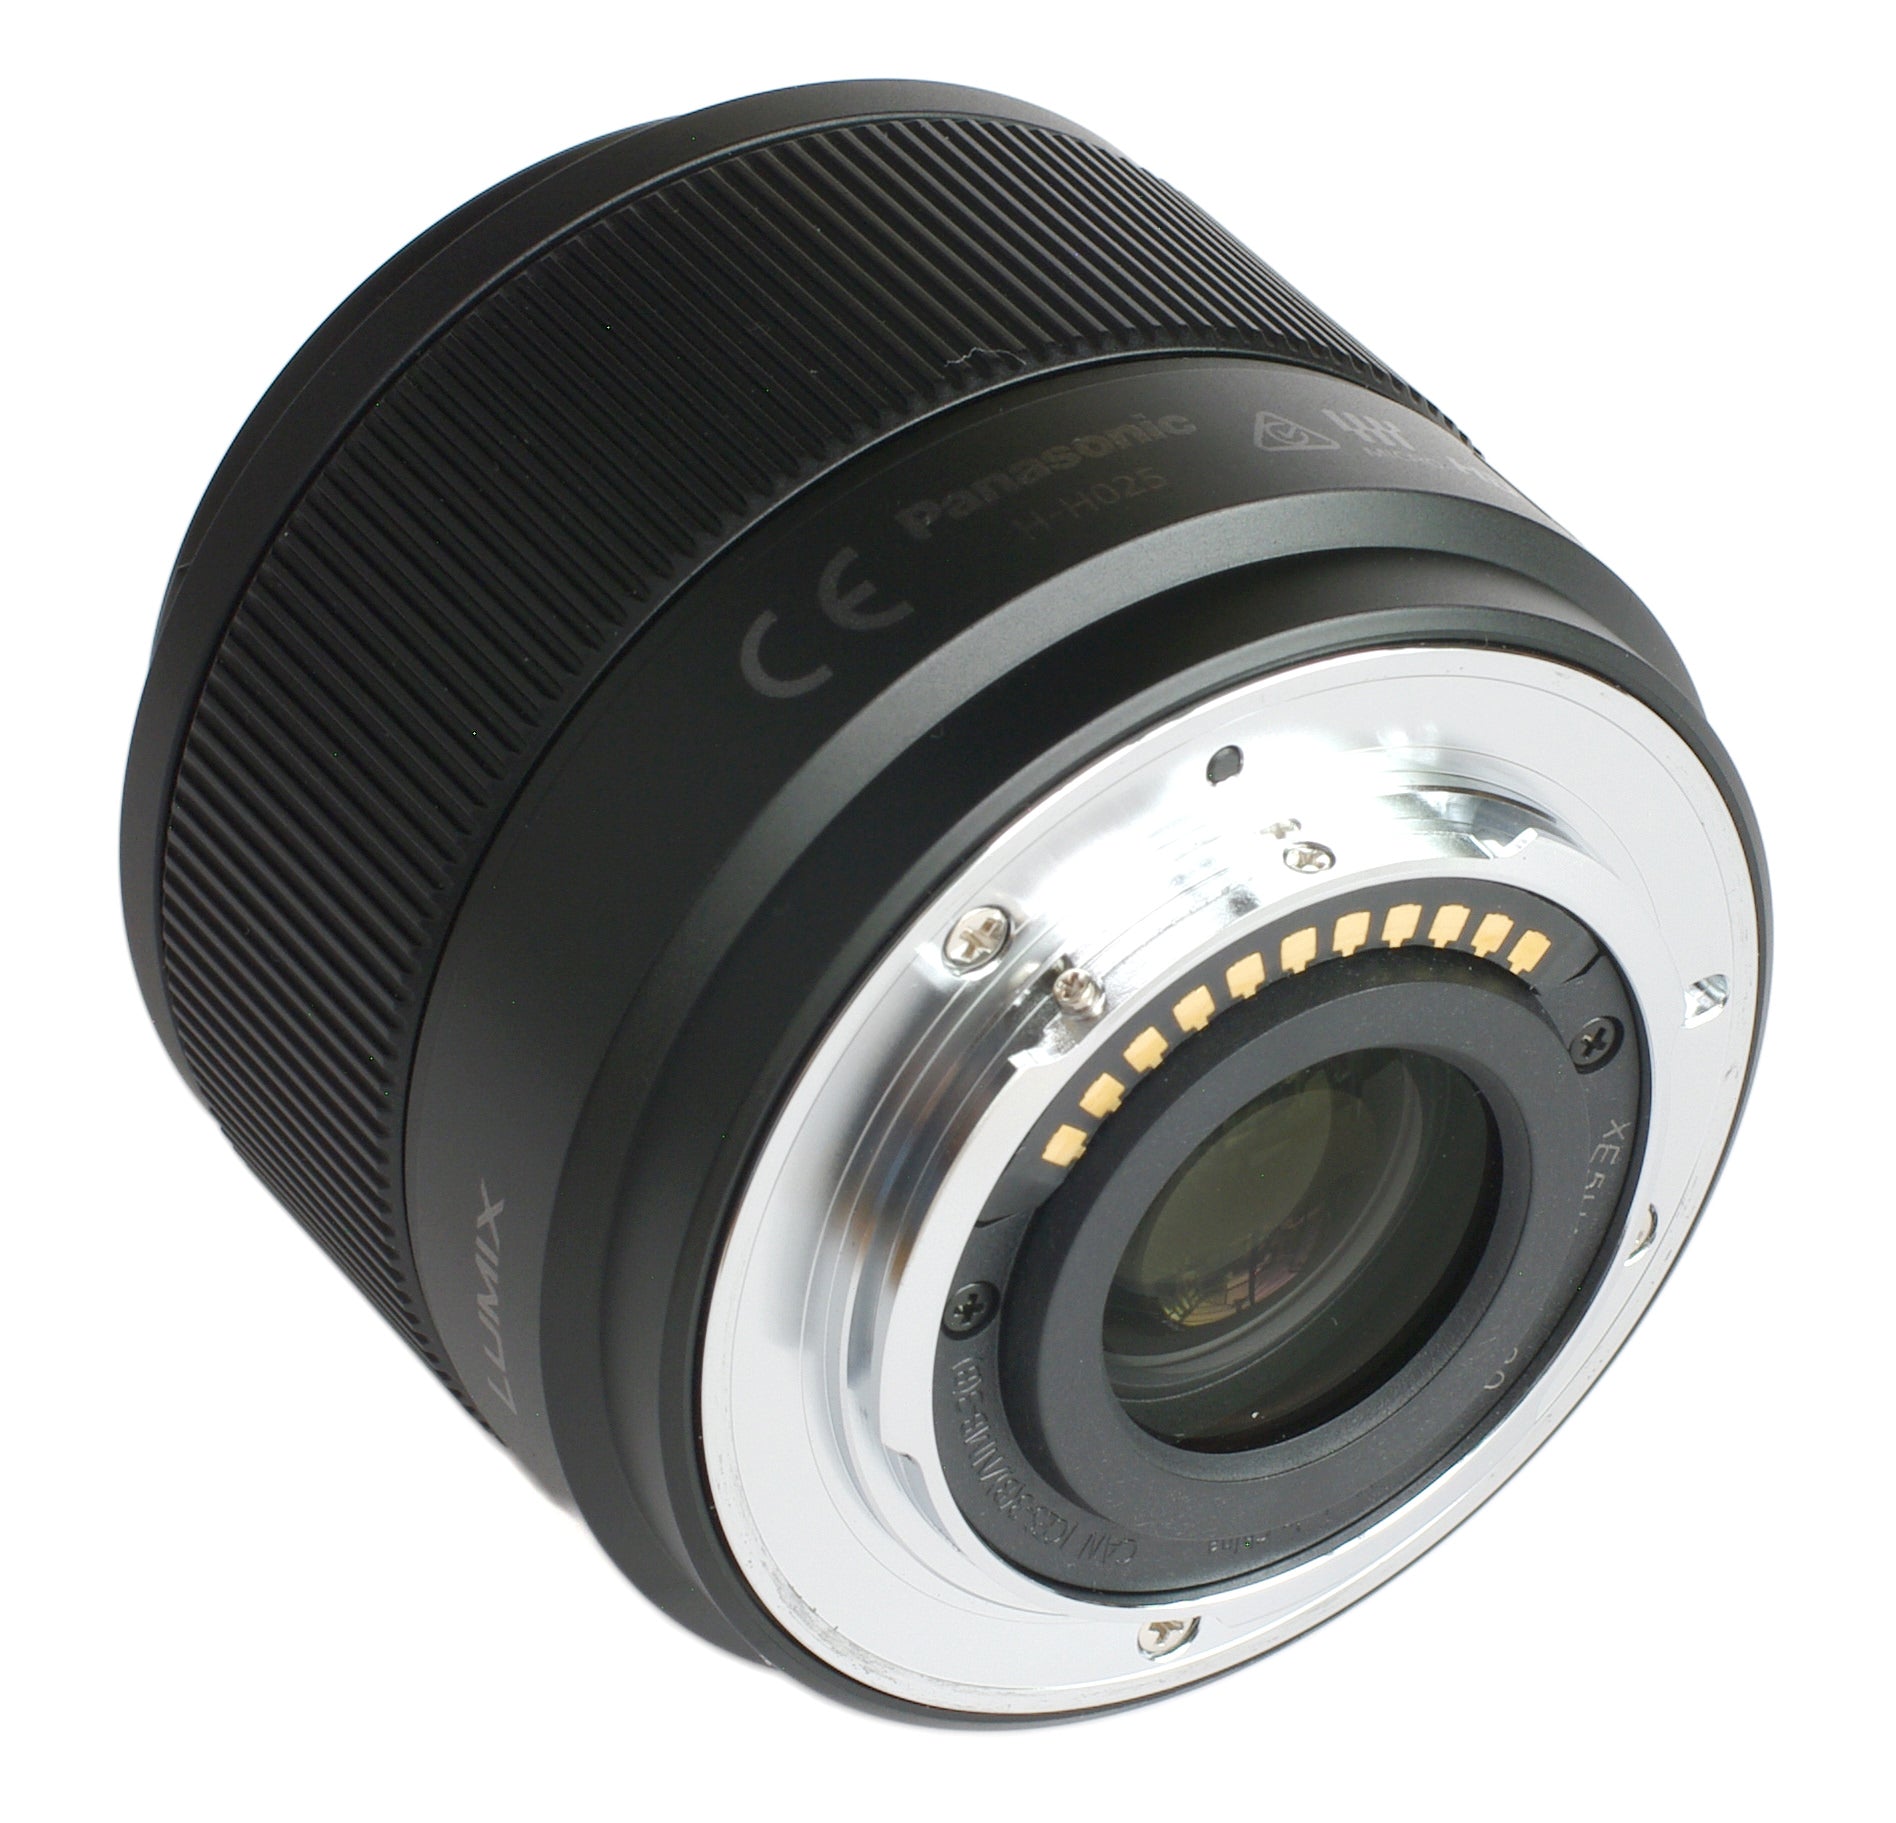 Panasonic 25mm f1.7 Lumix G ASPH lens, black in plain box